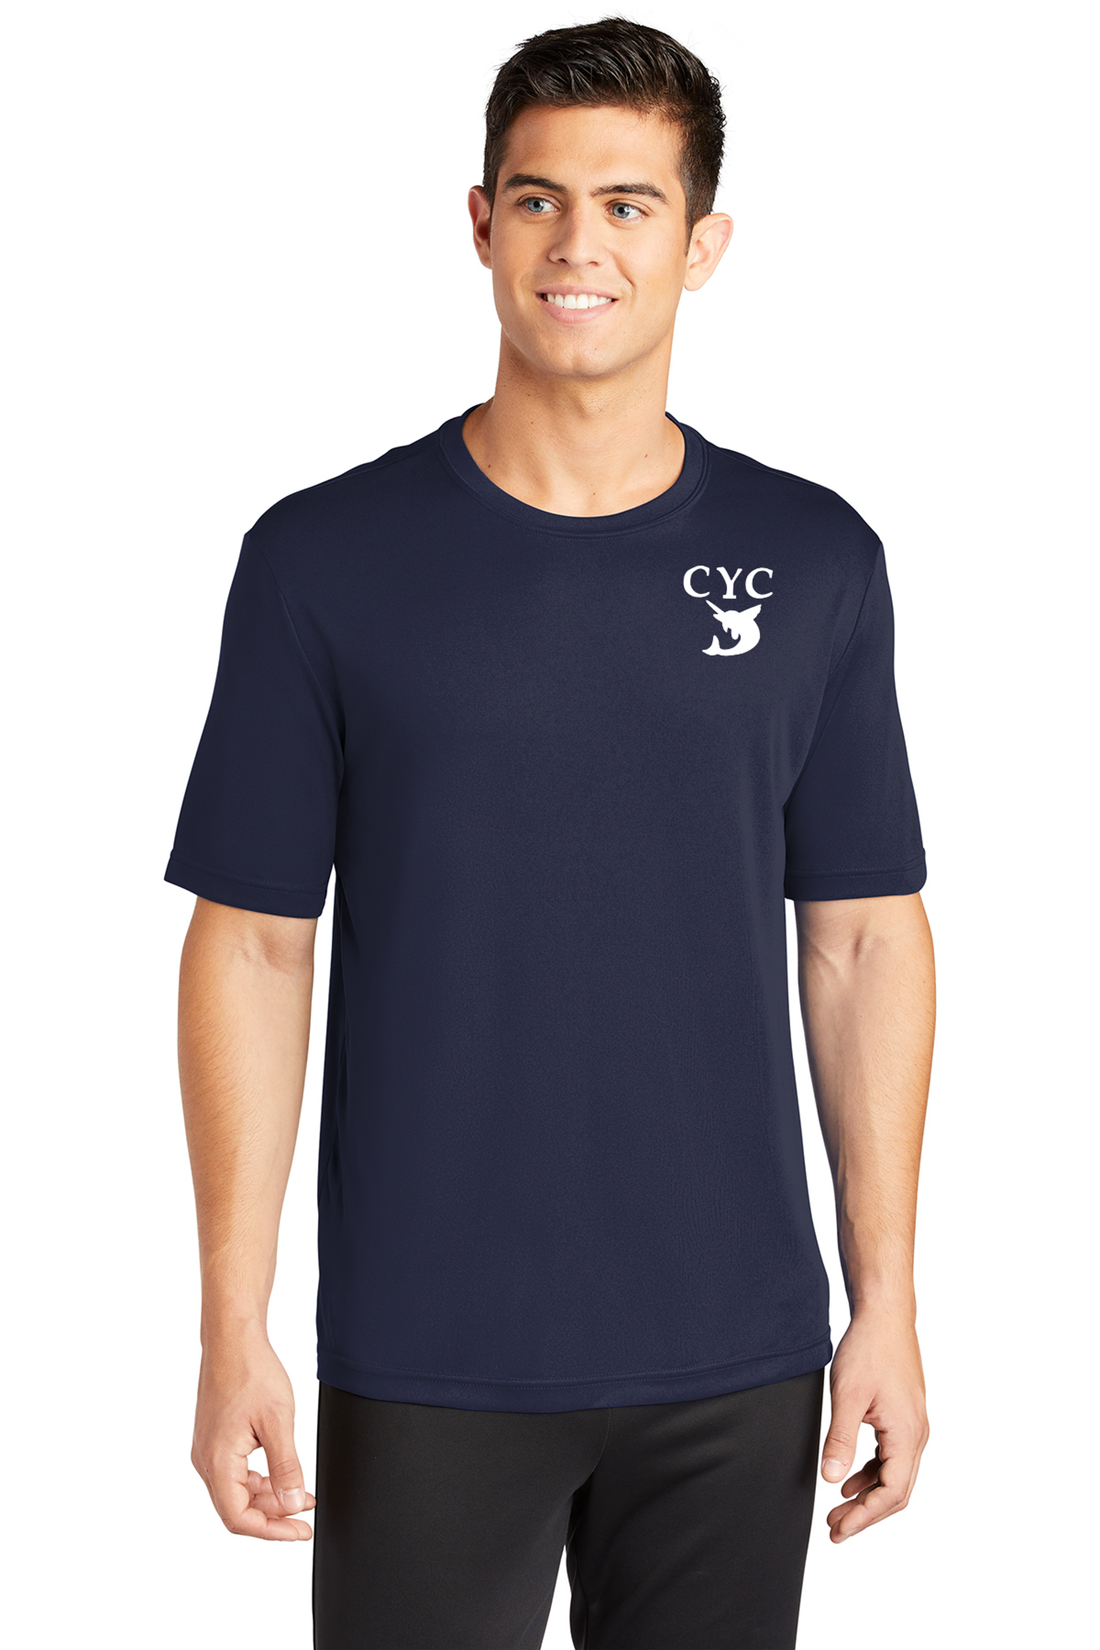 CYC Swim Team Performance Tee Shirt